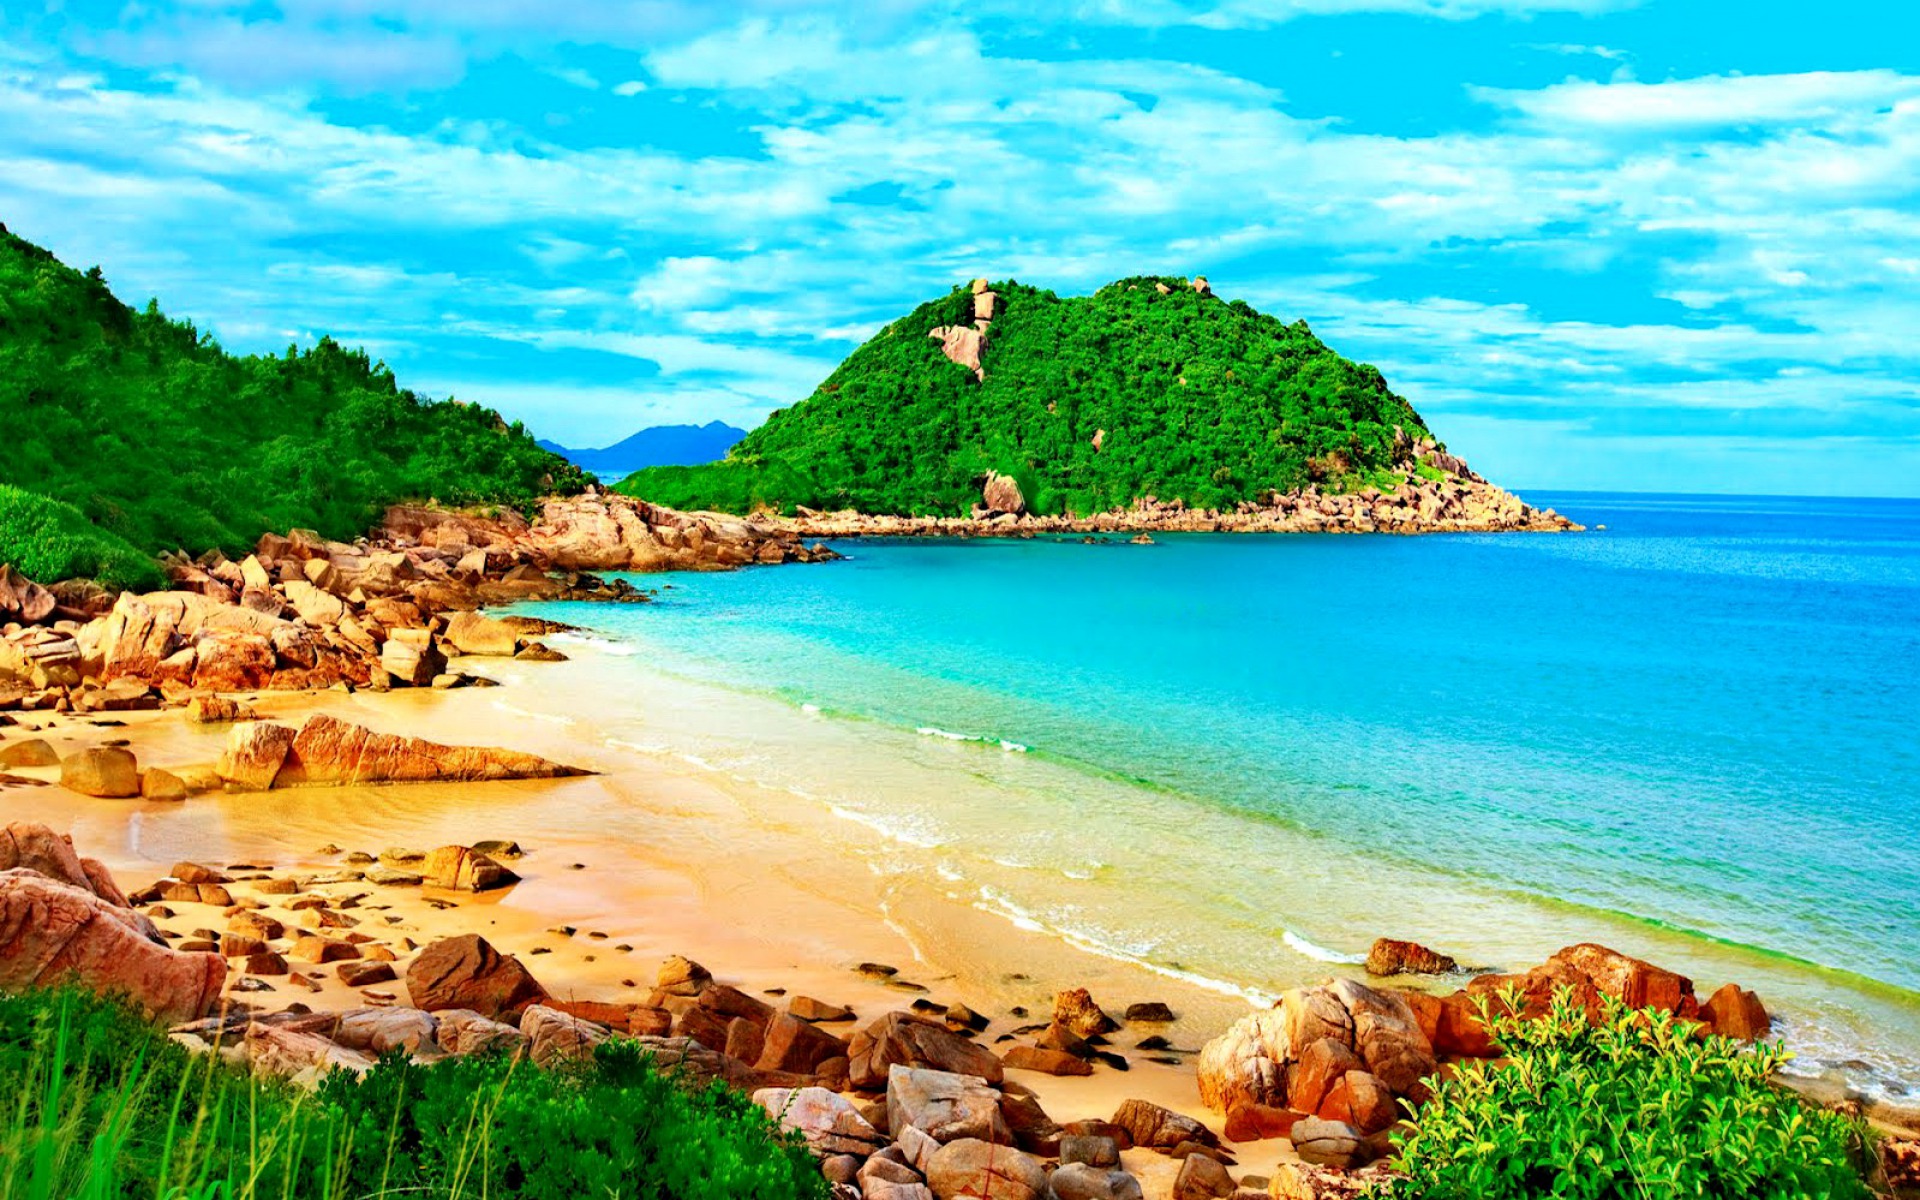 Descarga gratuita de fondo de pantalla para móvil de Mar, Playa, Costa, Océano, Tierra/naturaleza.